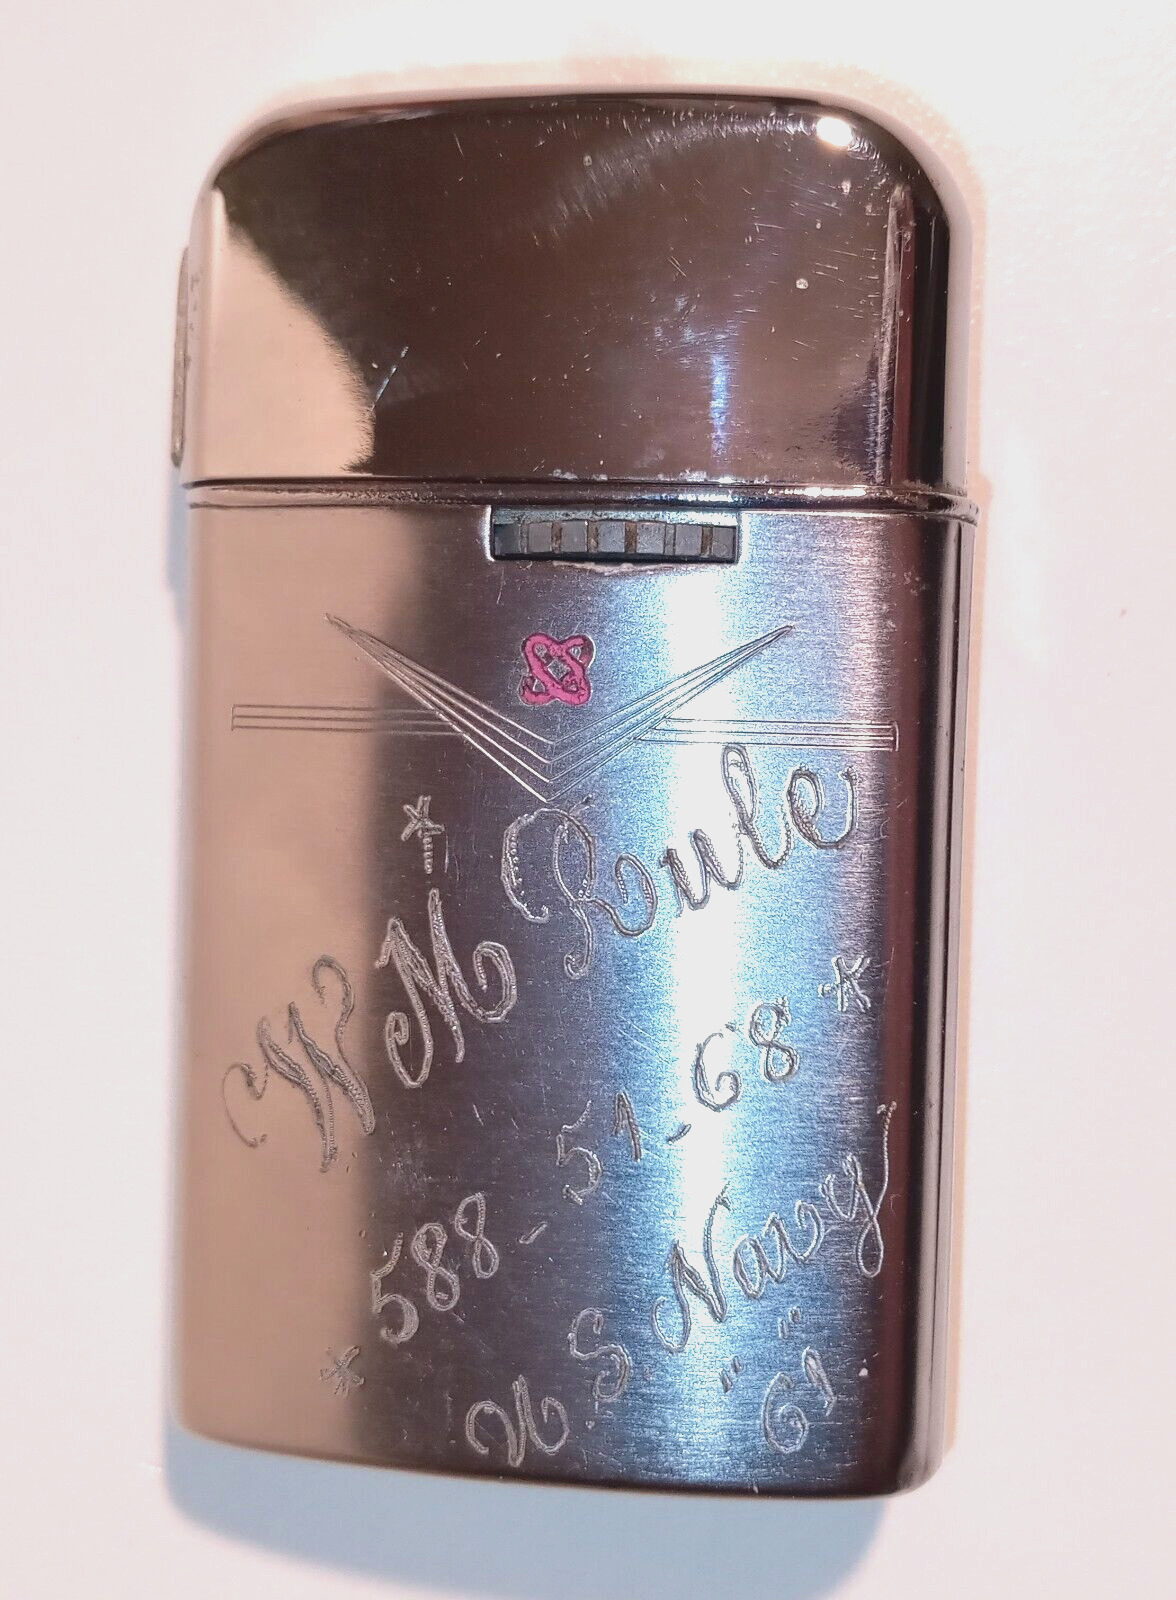 Ronson Atomic silver cigarette lighter Vietnam era engraved Vintage